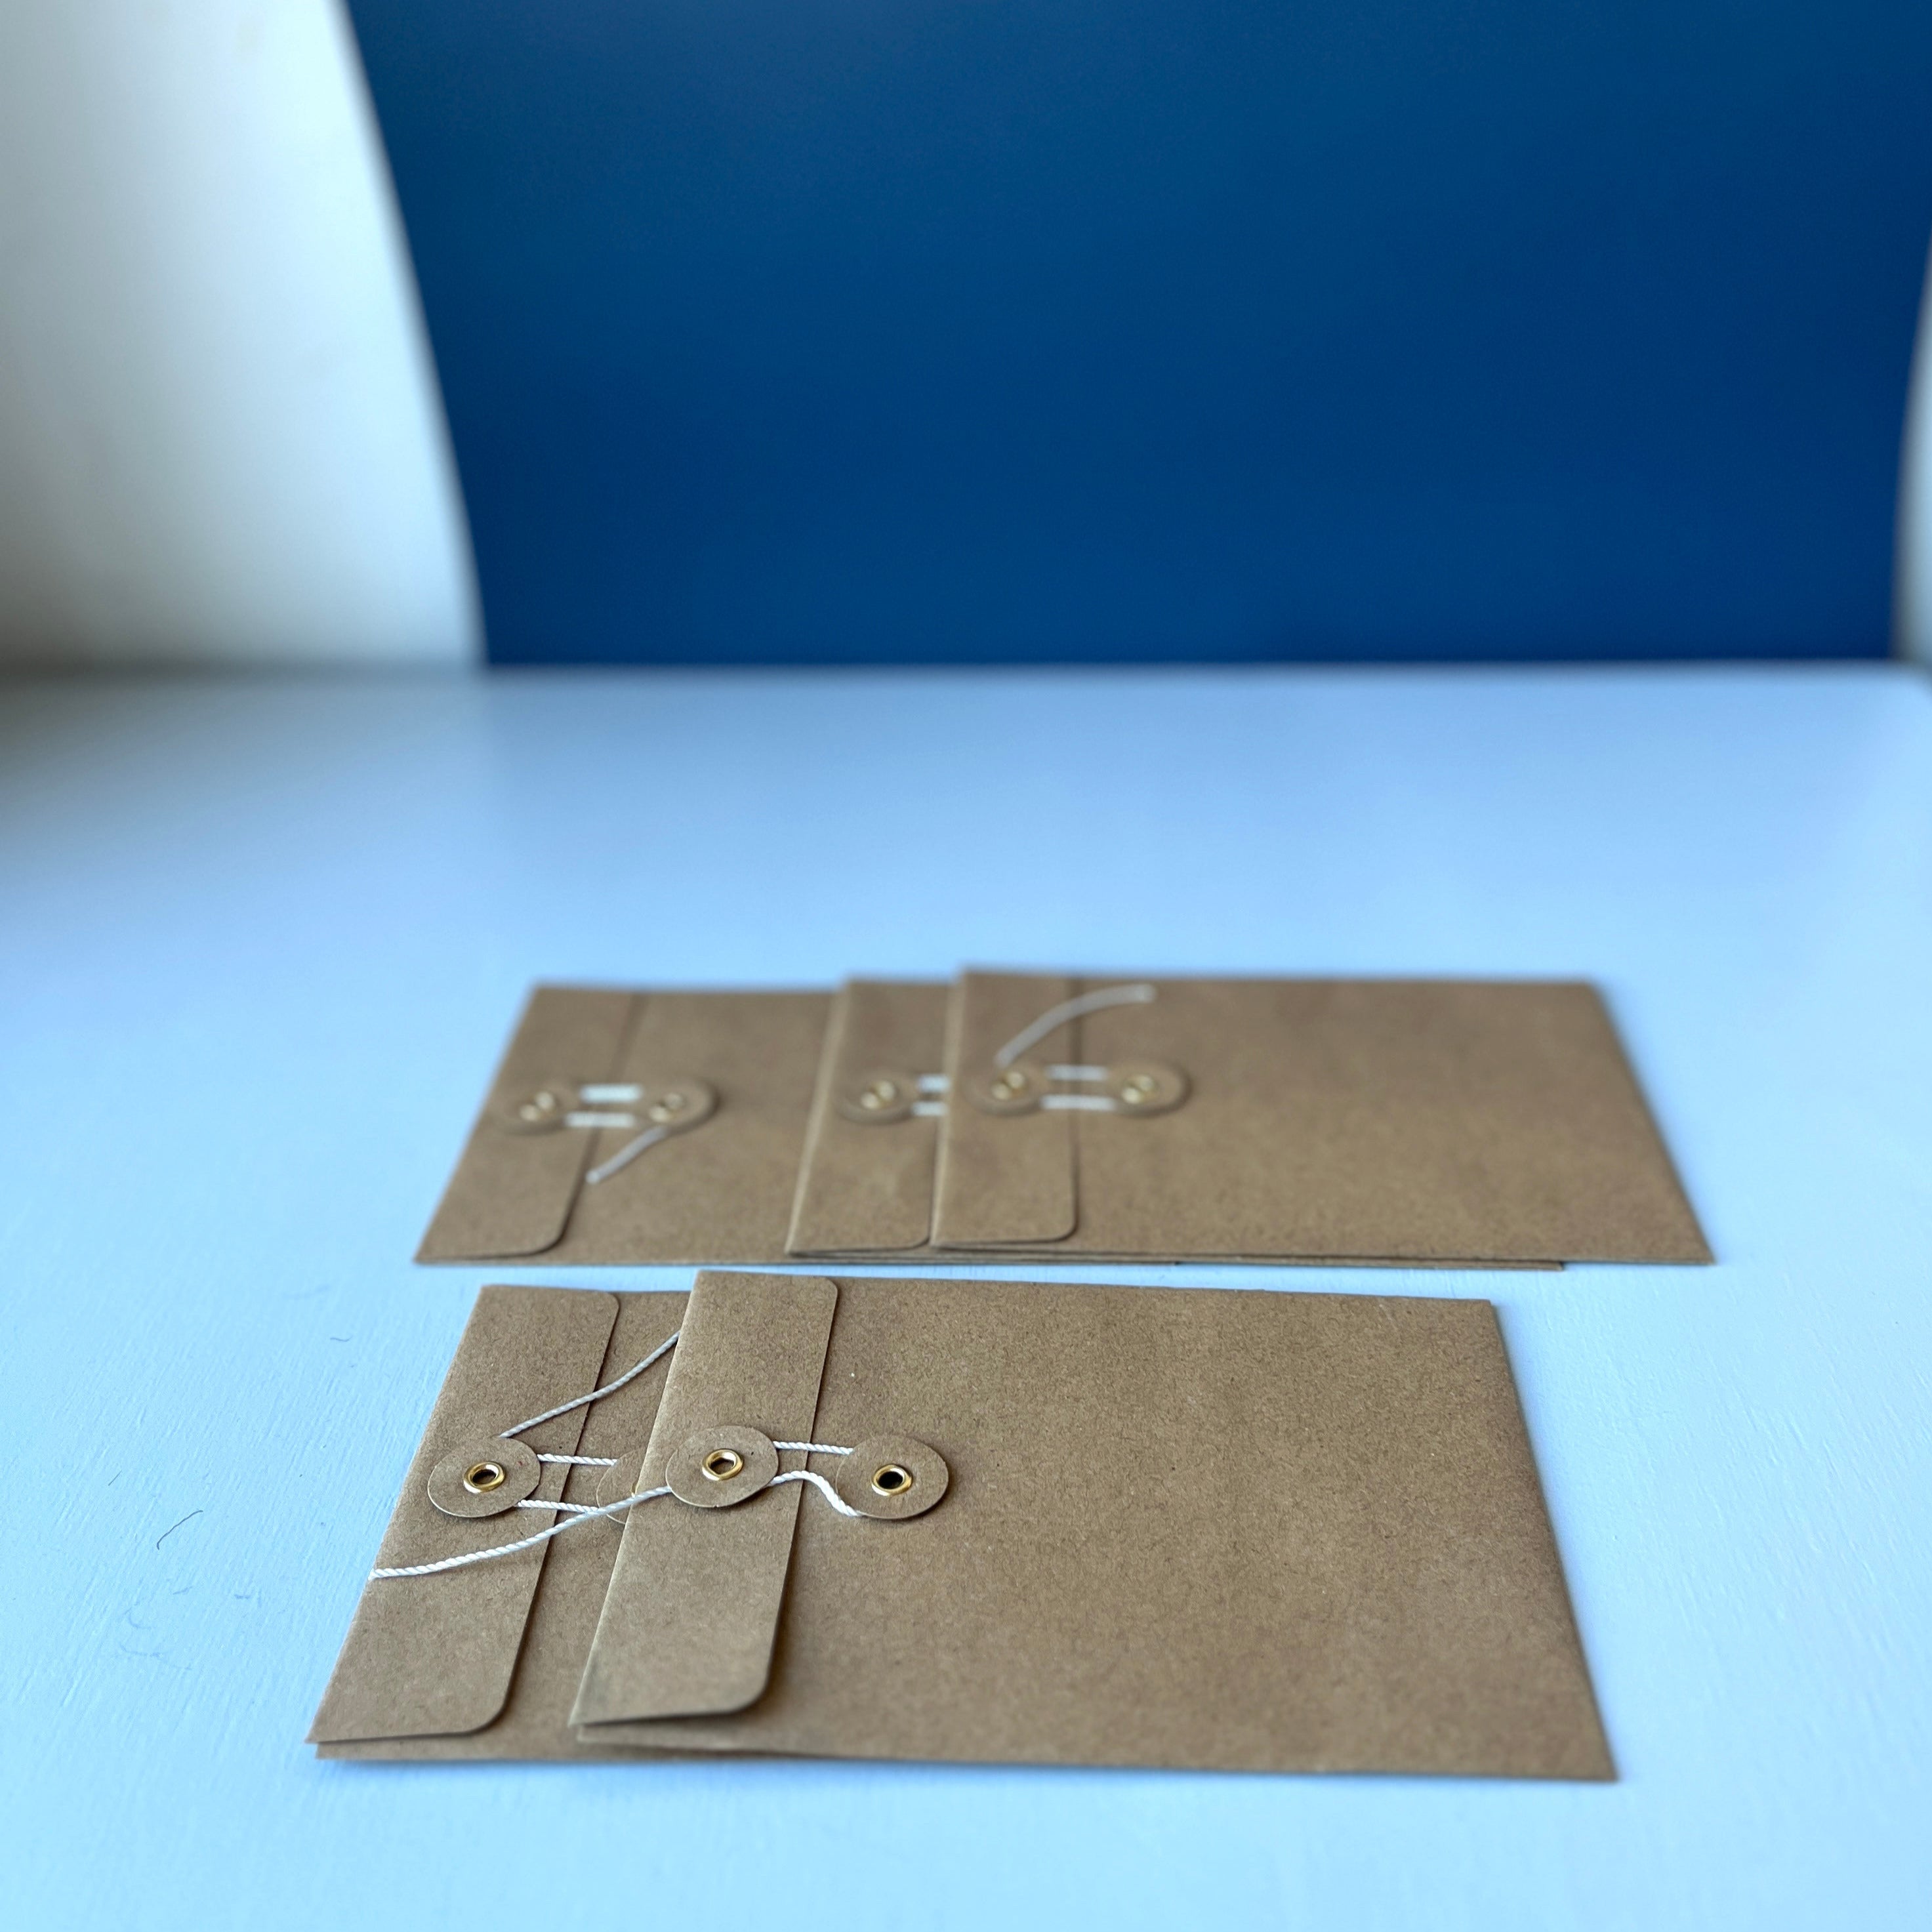 Set of 5 Japanese envelopes